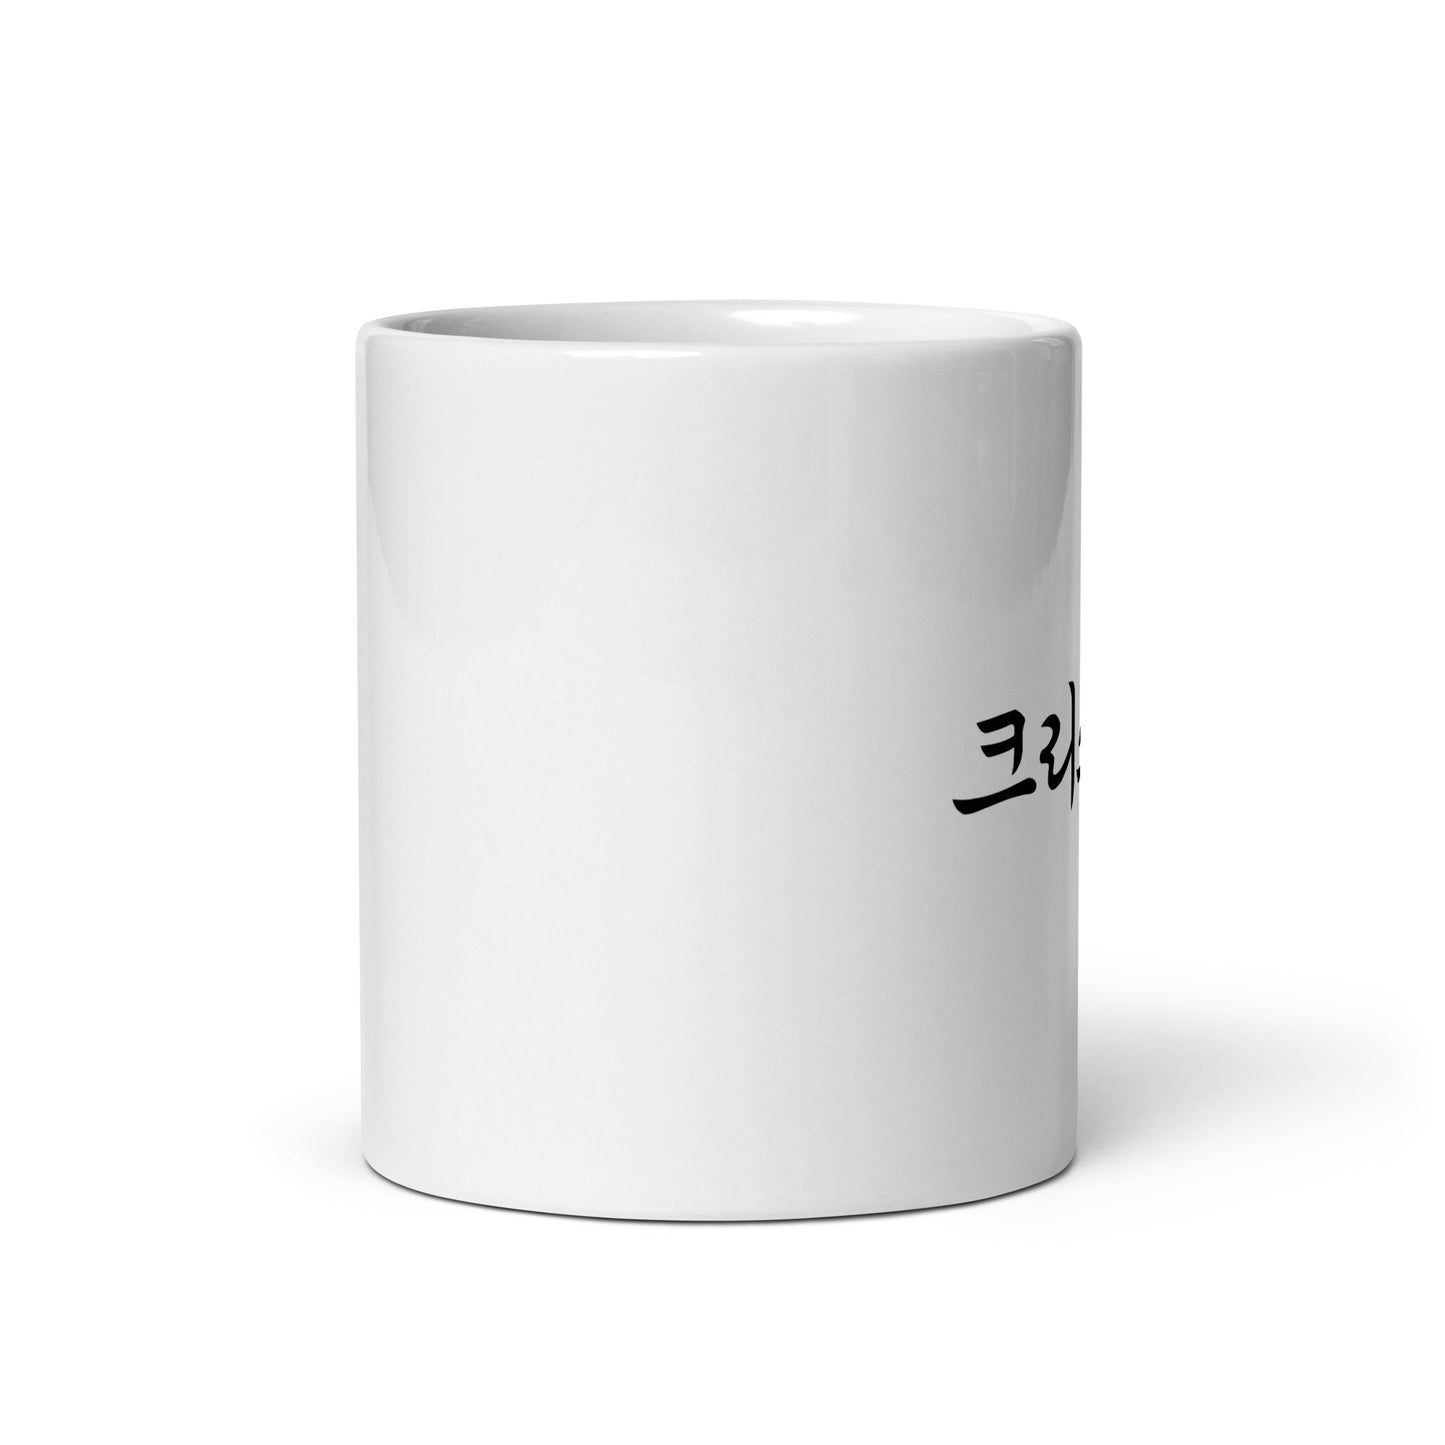 Christopher in Hangul Custom Name Gift Ceramic Mug